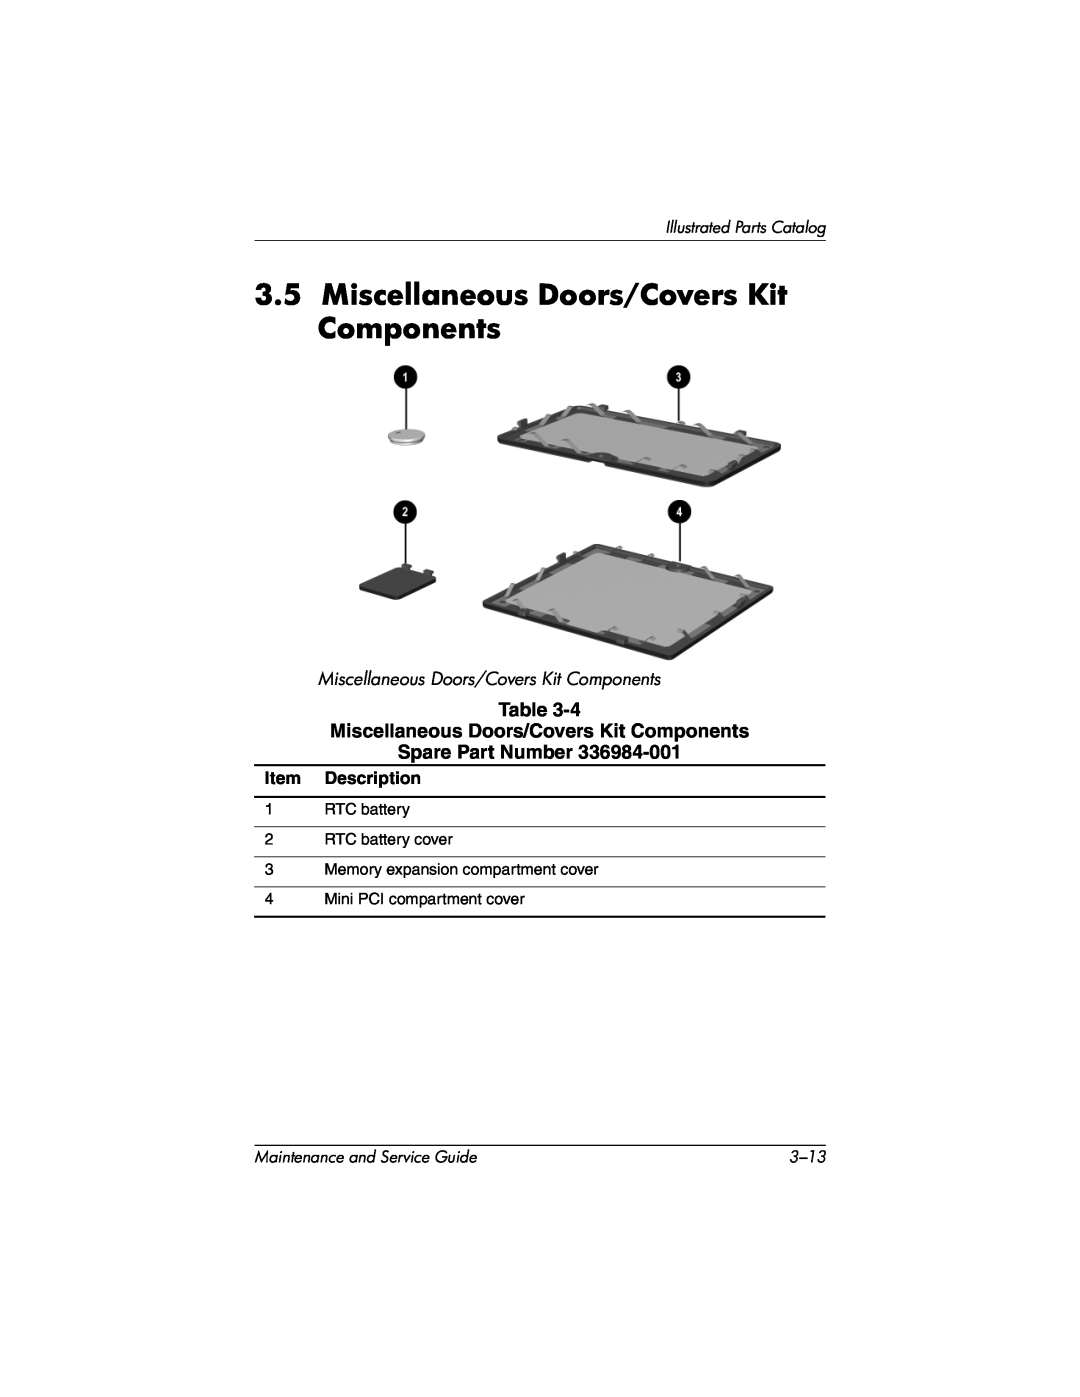 HP nx7000, X1000 manual Miscellaneous Doors/Covers Kit Components, Item Description, Illustrated Parts Catalog, 3-13 